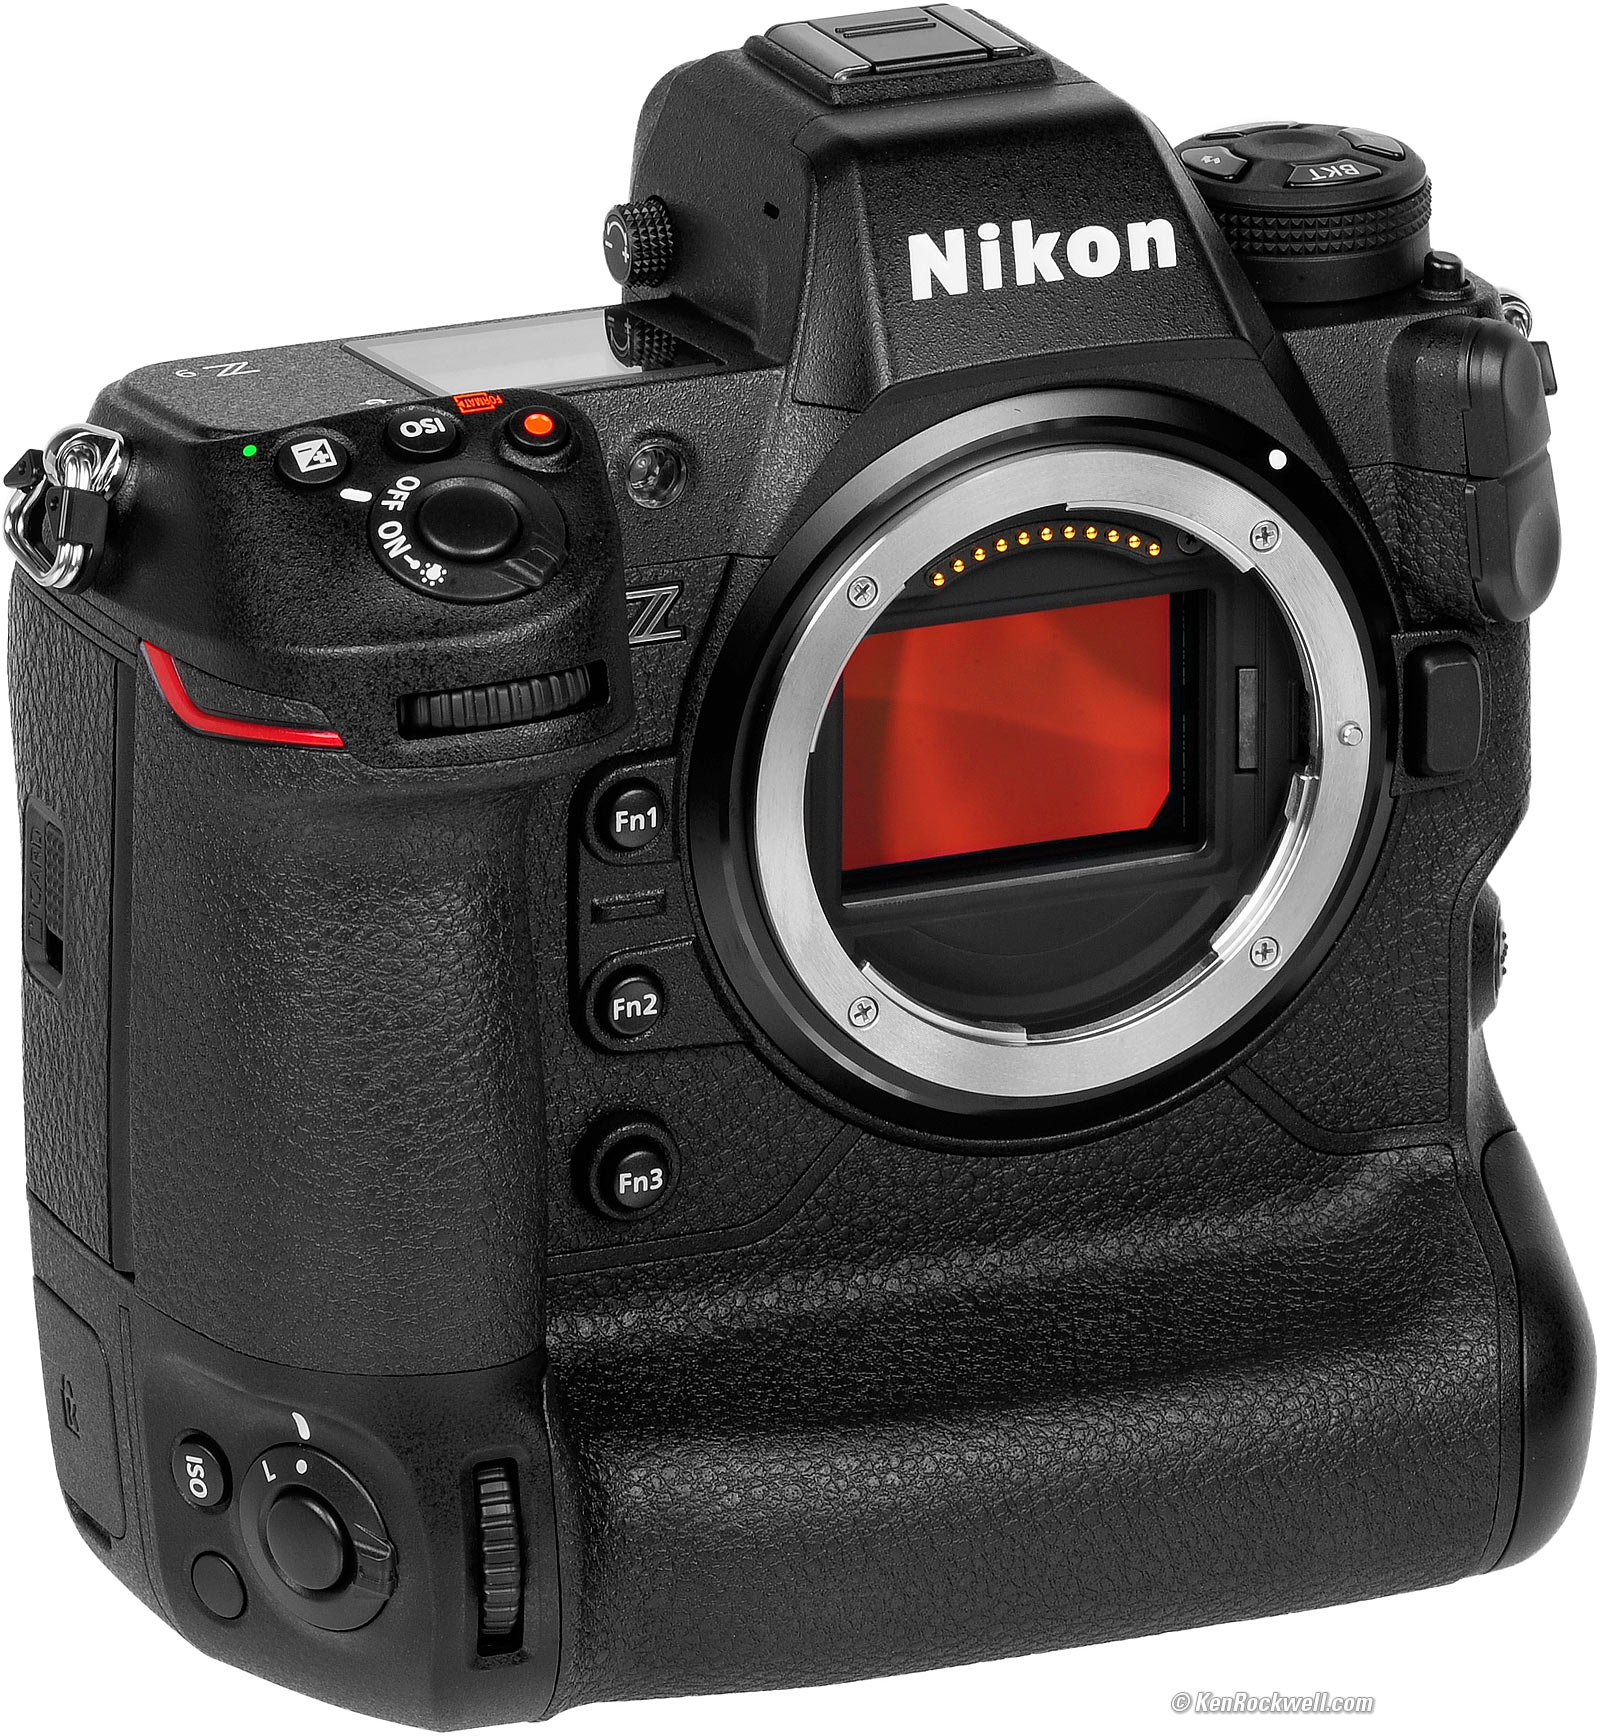 A smaller and cheaper entry-level Nikon Z30 mirrorless camera is still  expected - Nikon Rumors